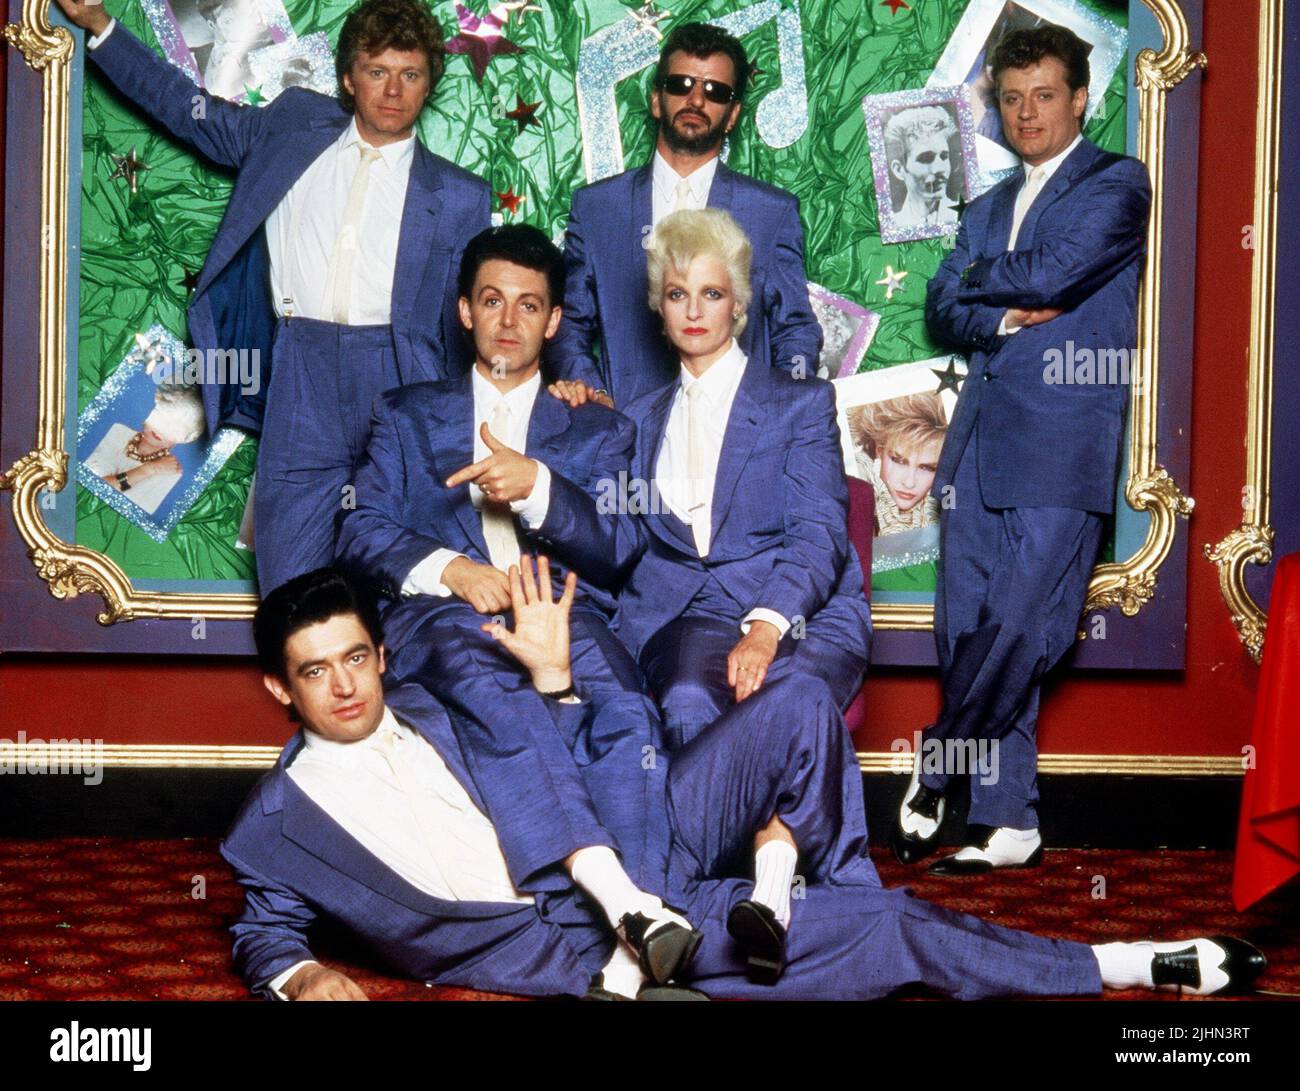 DAVE Edmunds, PAUL MCCARTNEY, LINDA MCCARTNEY, Ringo Starr, John Paul Jones, Chris SPEDDING, Transmítale mis saludos a Broad Street, 1984 Foto de stock